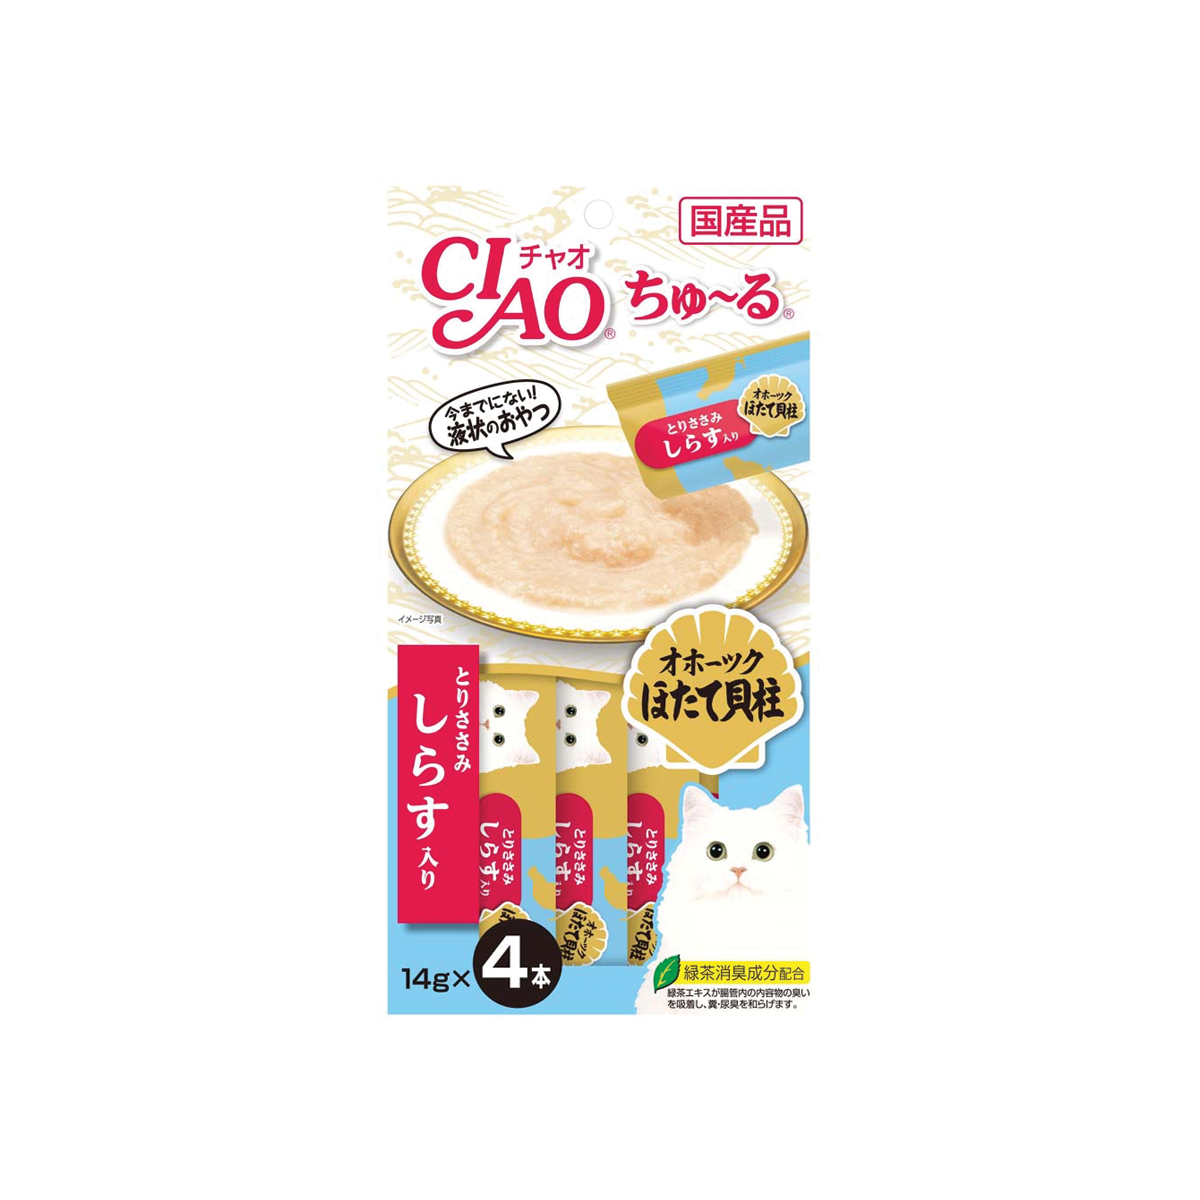 CIAO Churu Chicken Fillet Scallop & Whitebait Grain-Free Flavor เชาว์ ชูหรุ ขนมแมวครีมเลีย รสเนื้อสันในไก่กับหอยเชลล์และปลาข้าวสาร ขนาด 56 กรัม